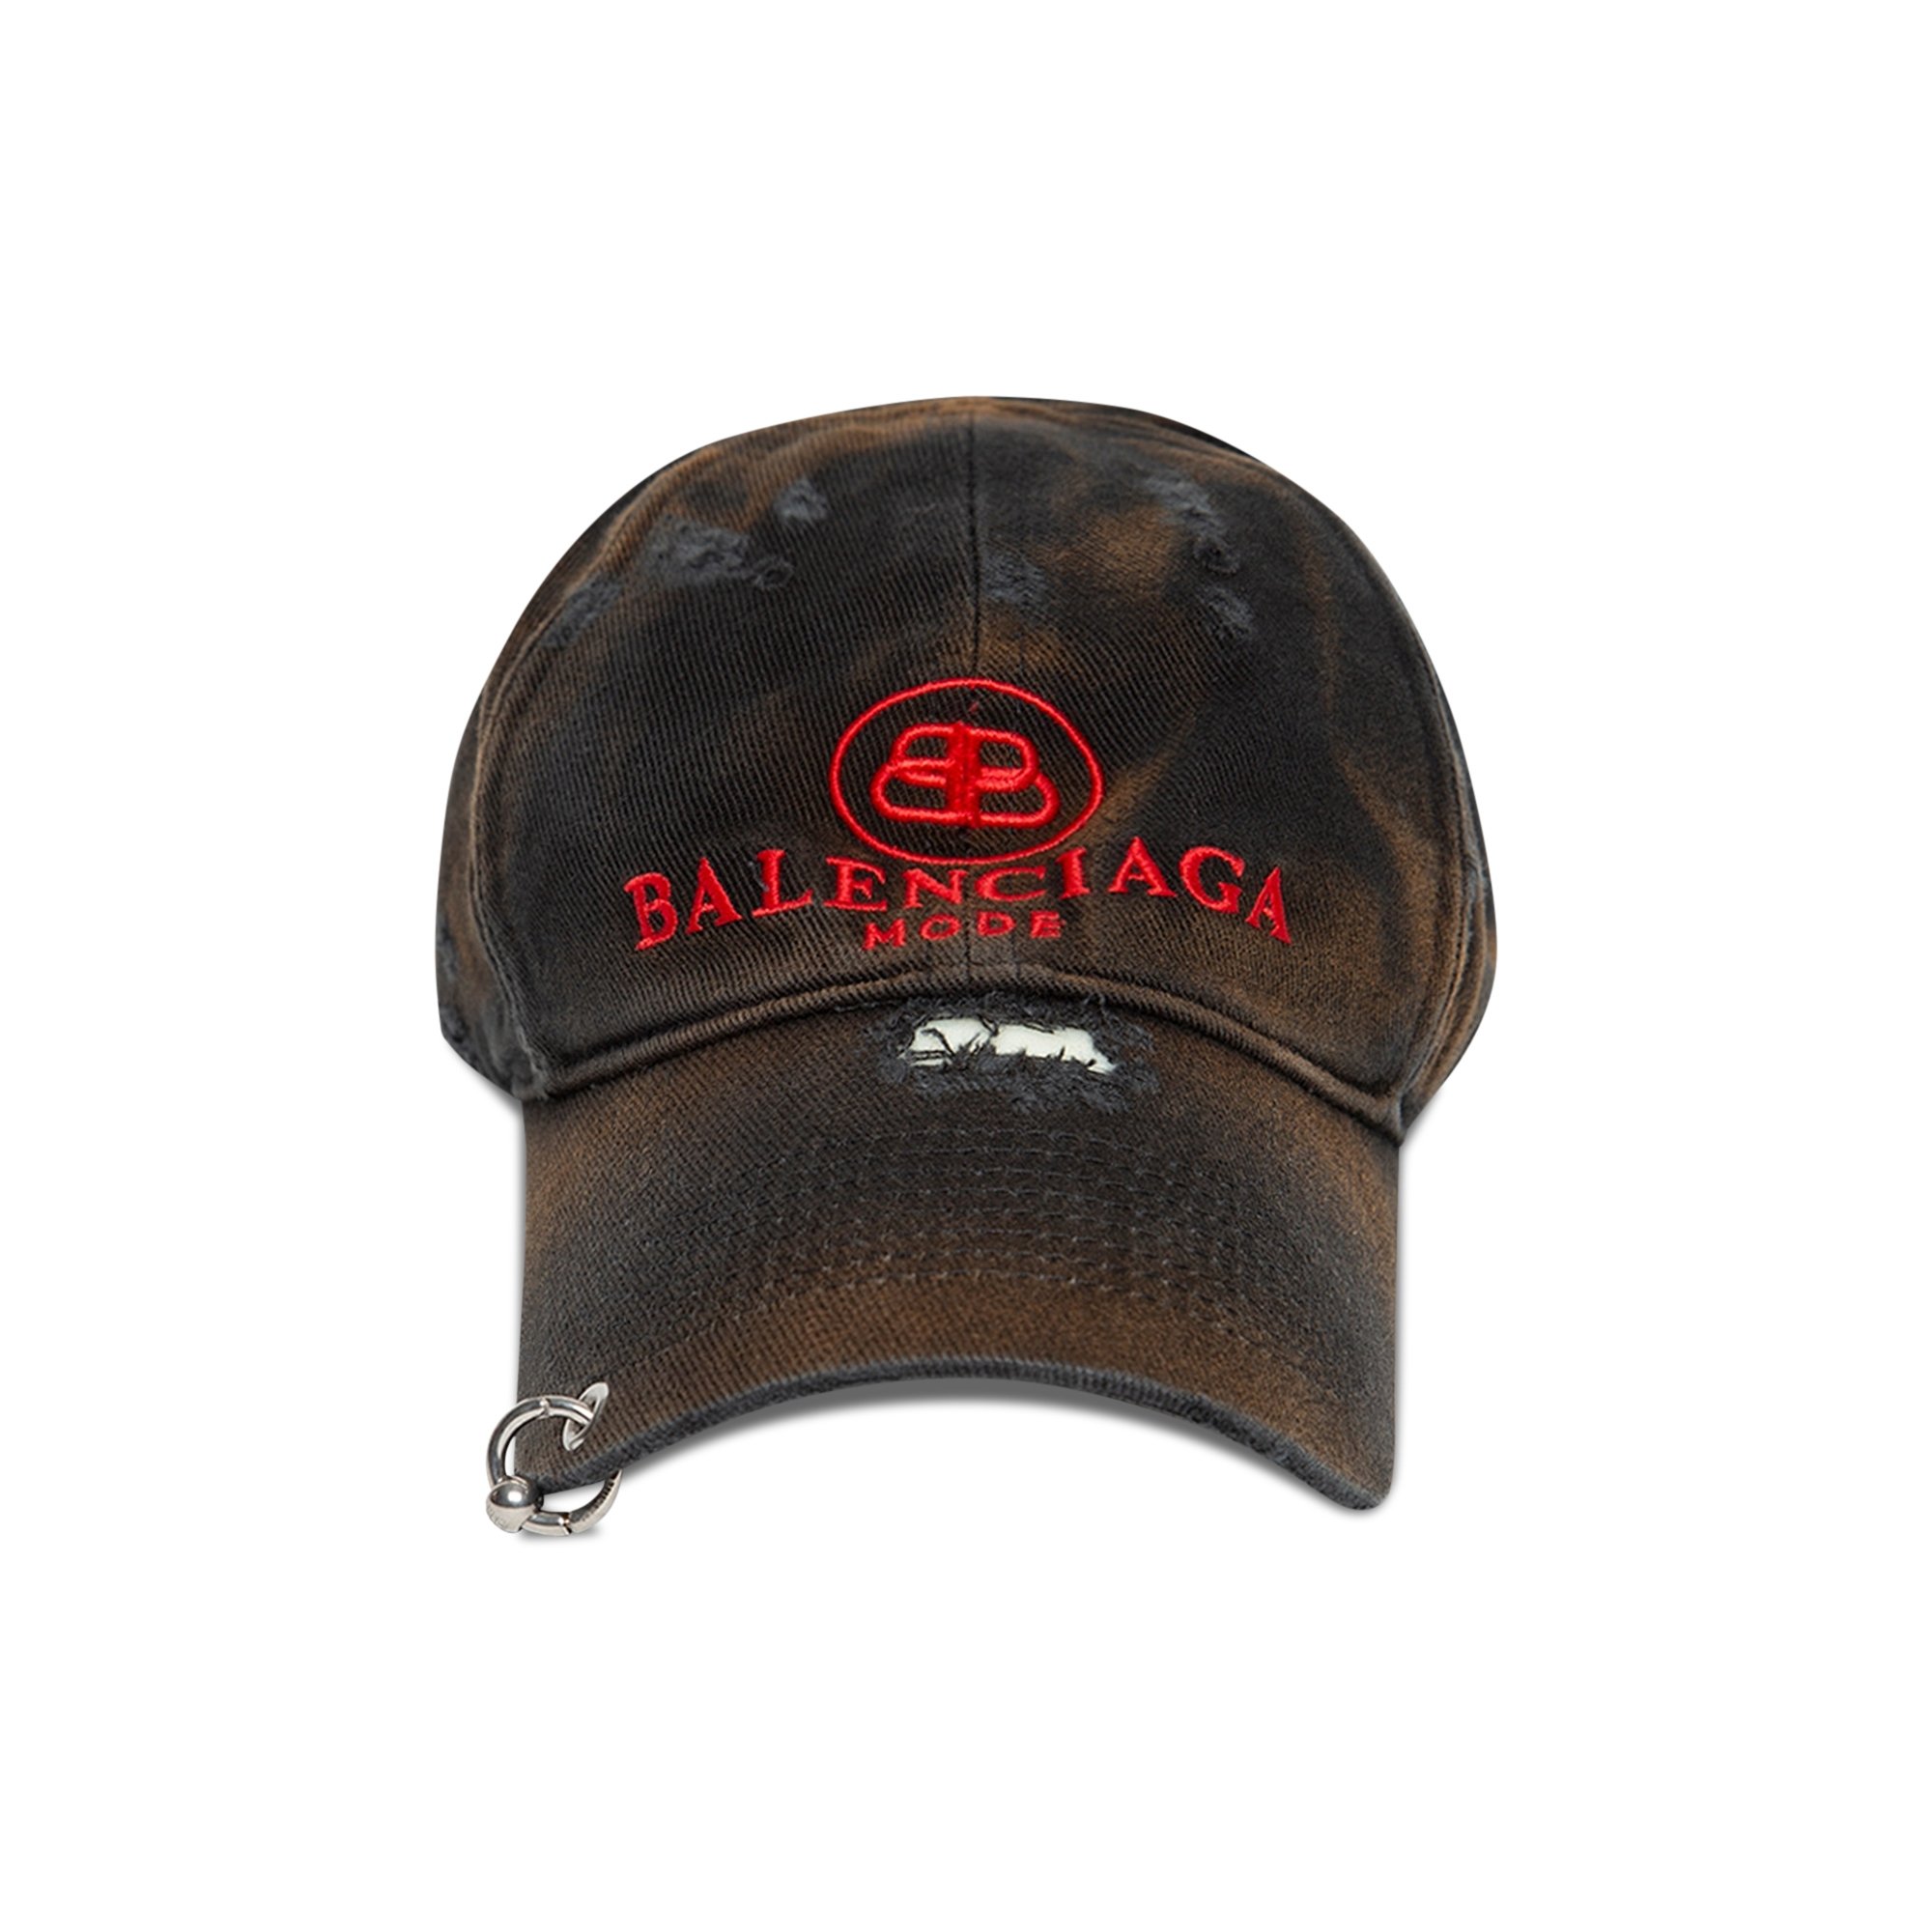 Buy Balenciaga Destroyed BB Mode Cap 'Black/Red' - 661885 410B2